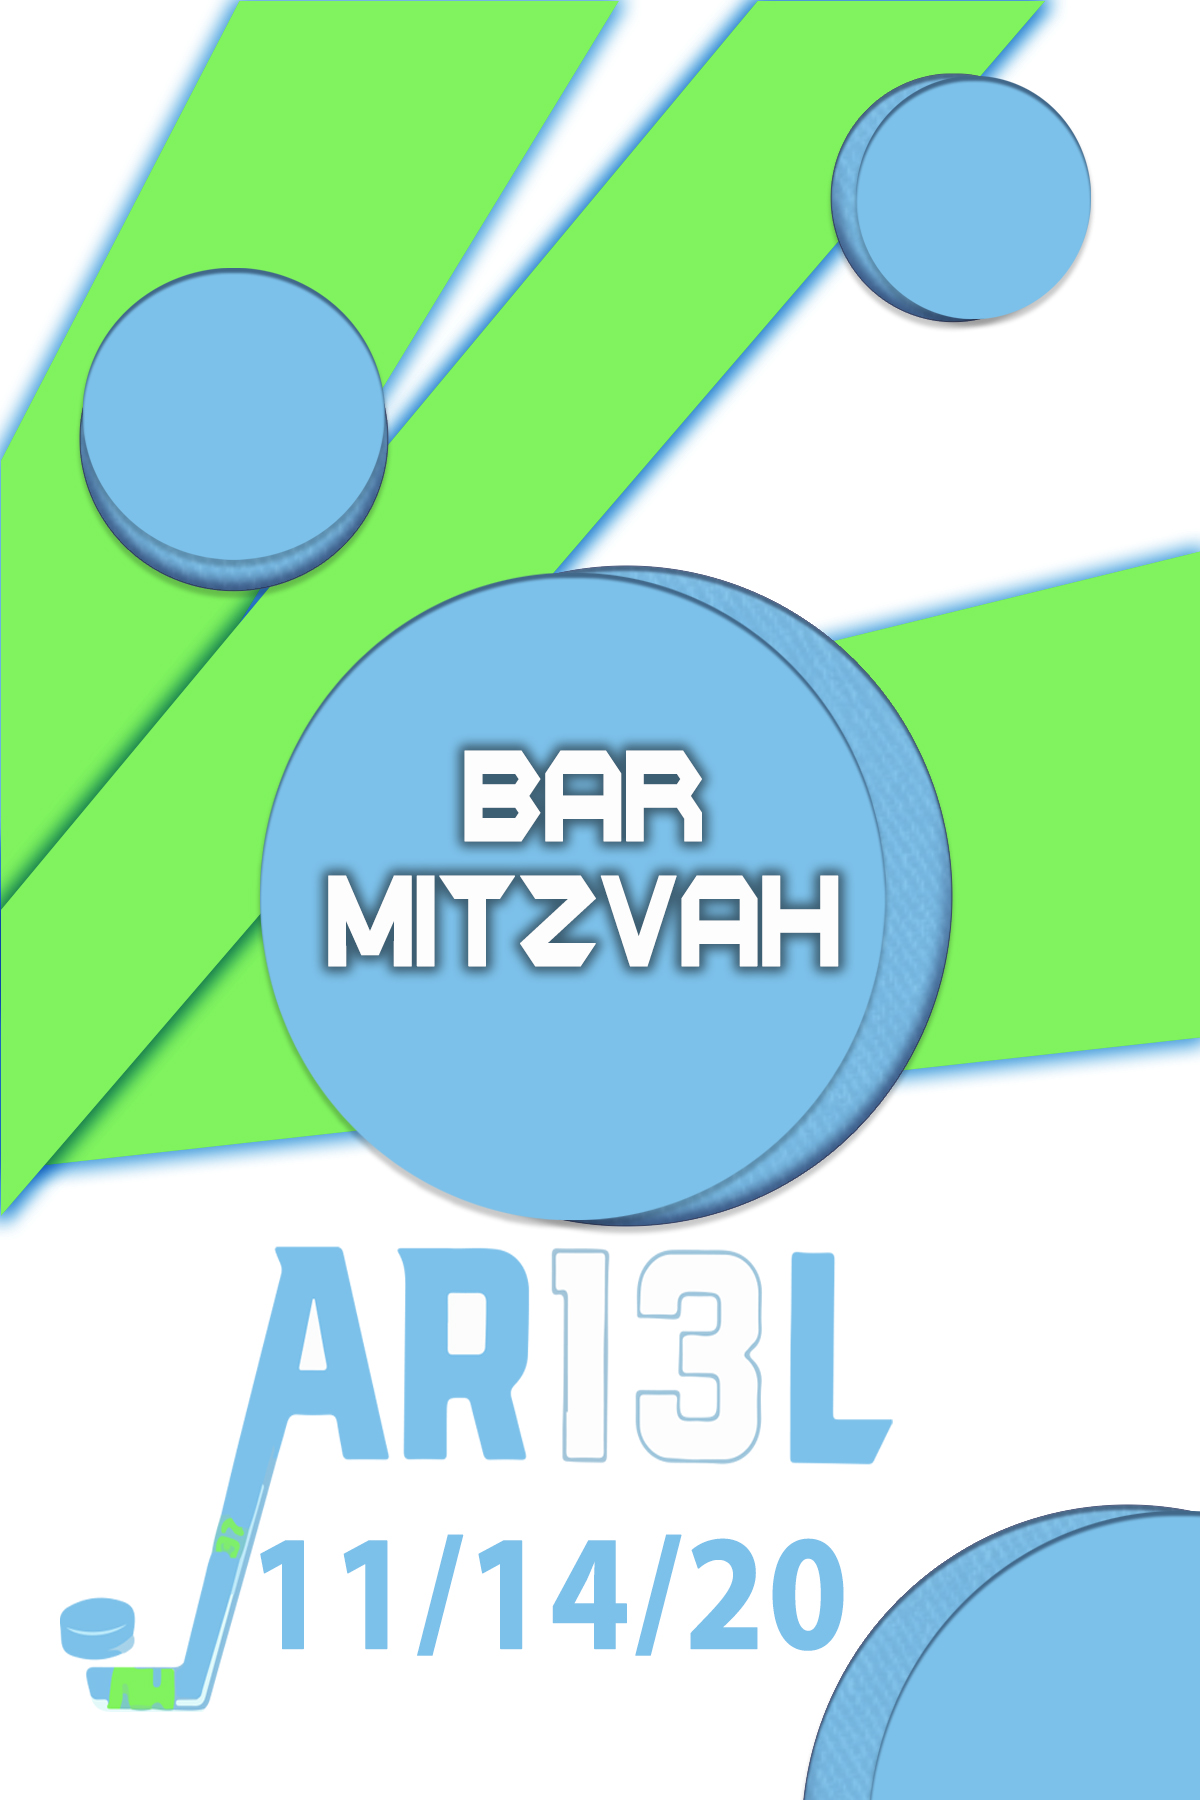 Ariel's Amazing Bar Mitzvah